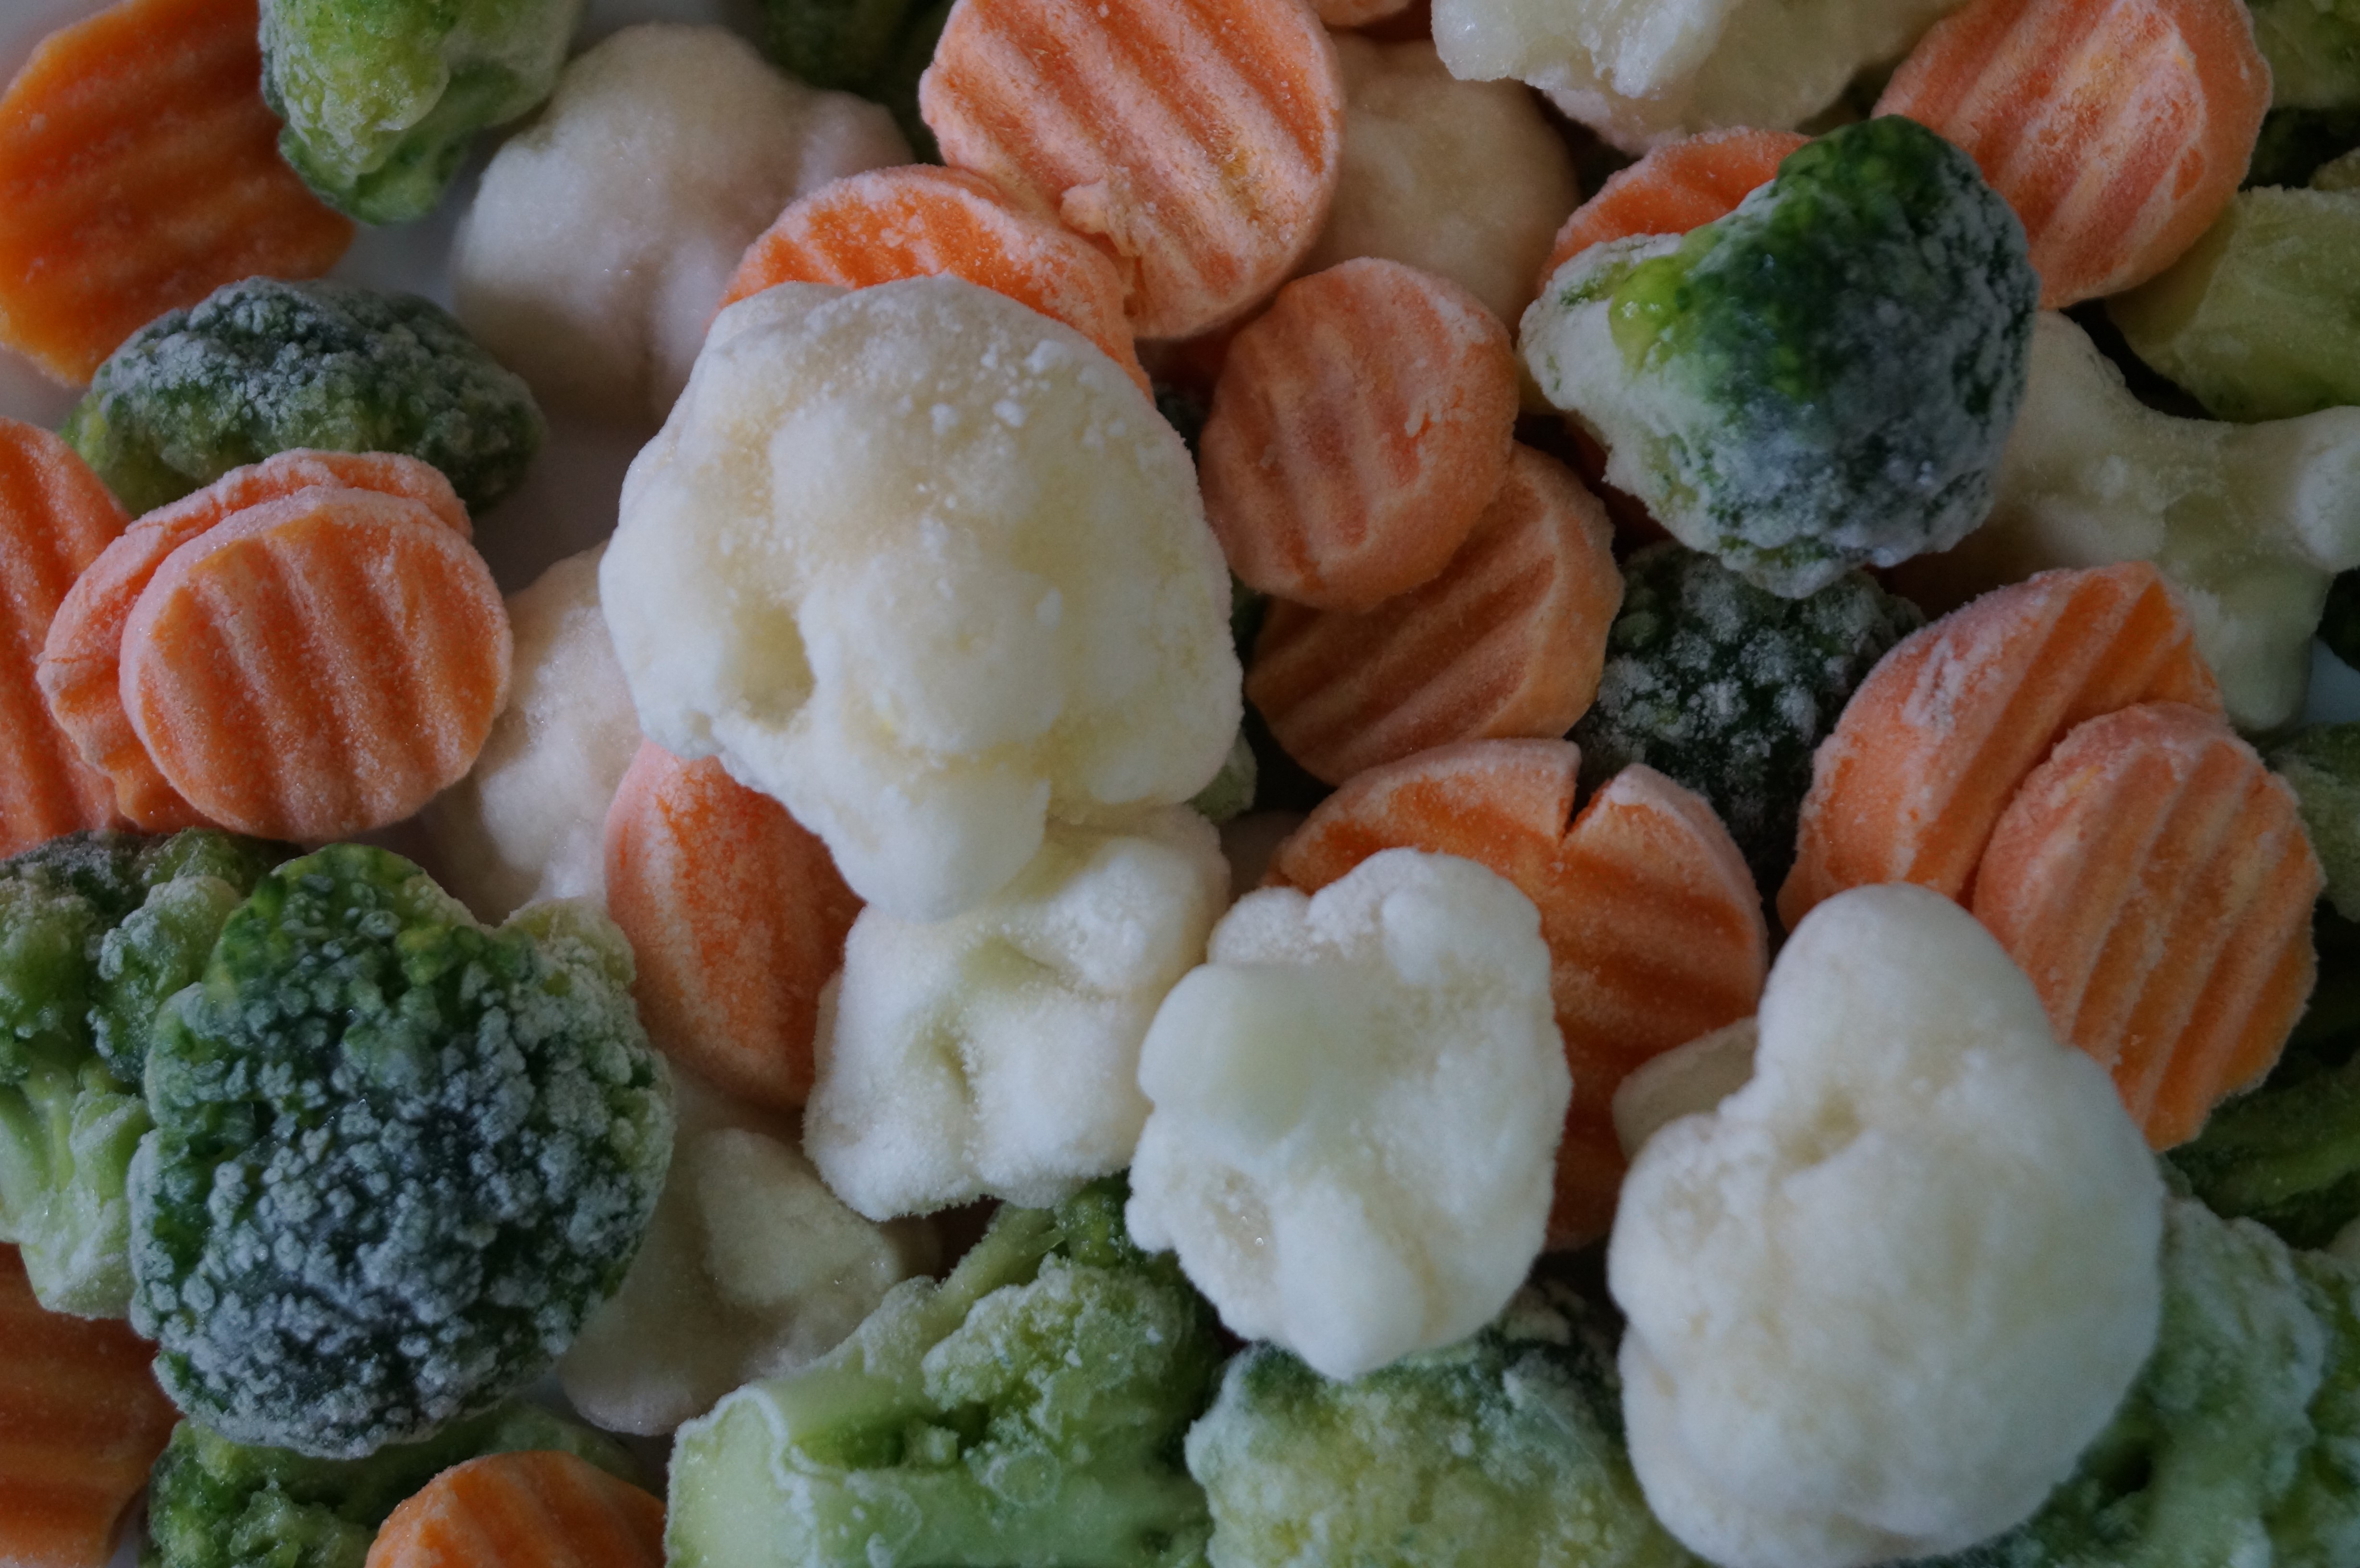 MIXED VEGETABLES CALIFORNIA BLEND Broccoli Cauliflower Carrot 2